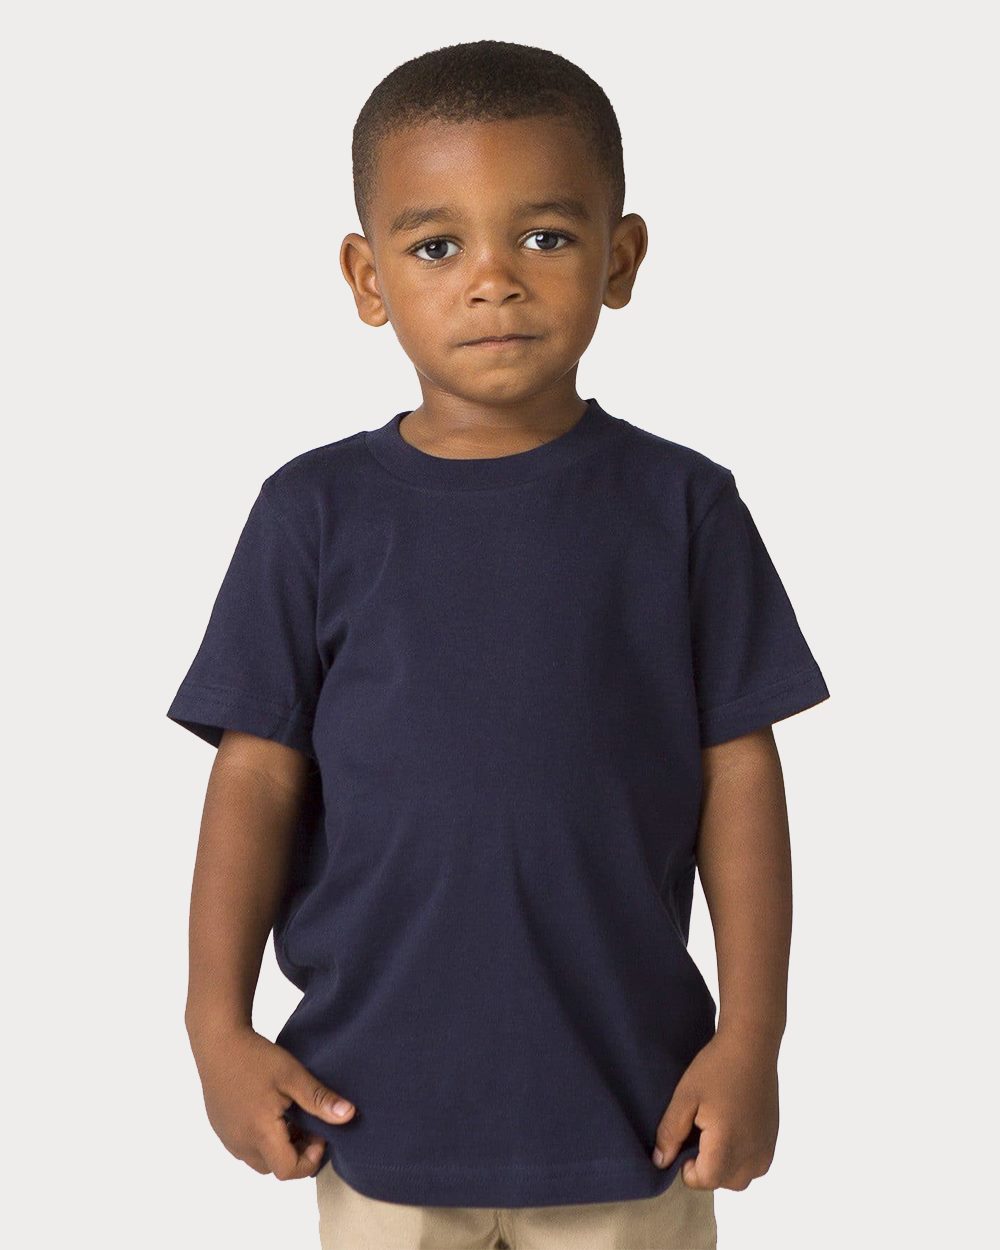 Los Angeles Apparel 21005 - USA-Made Youth T-Shirt